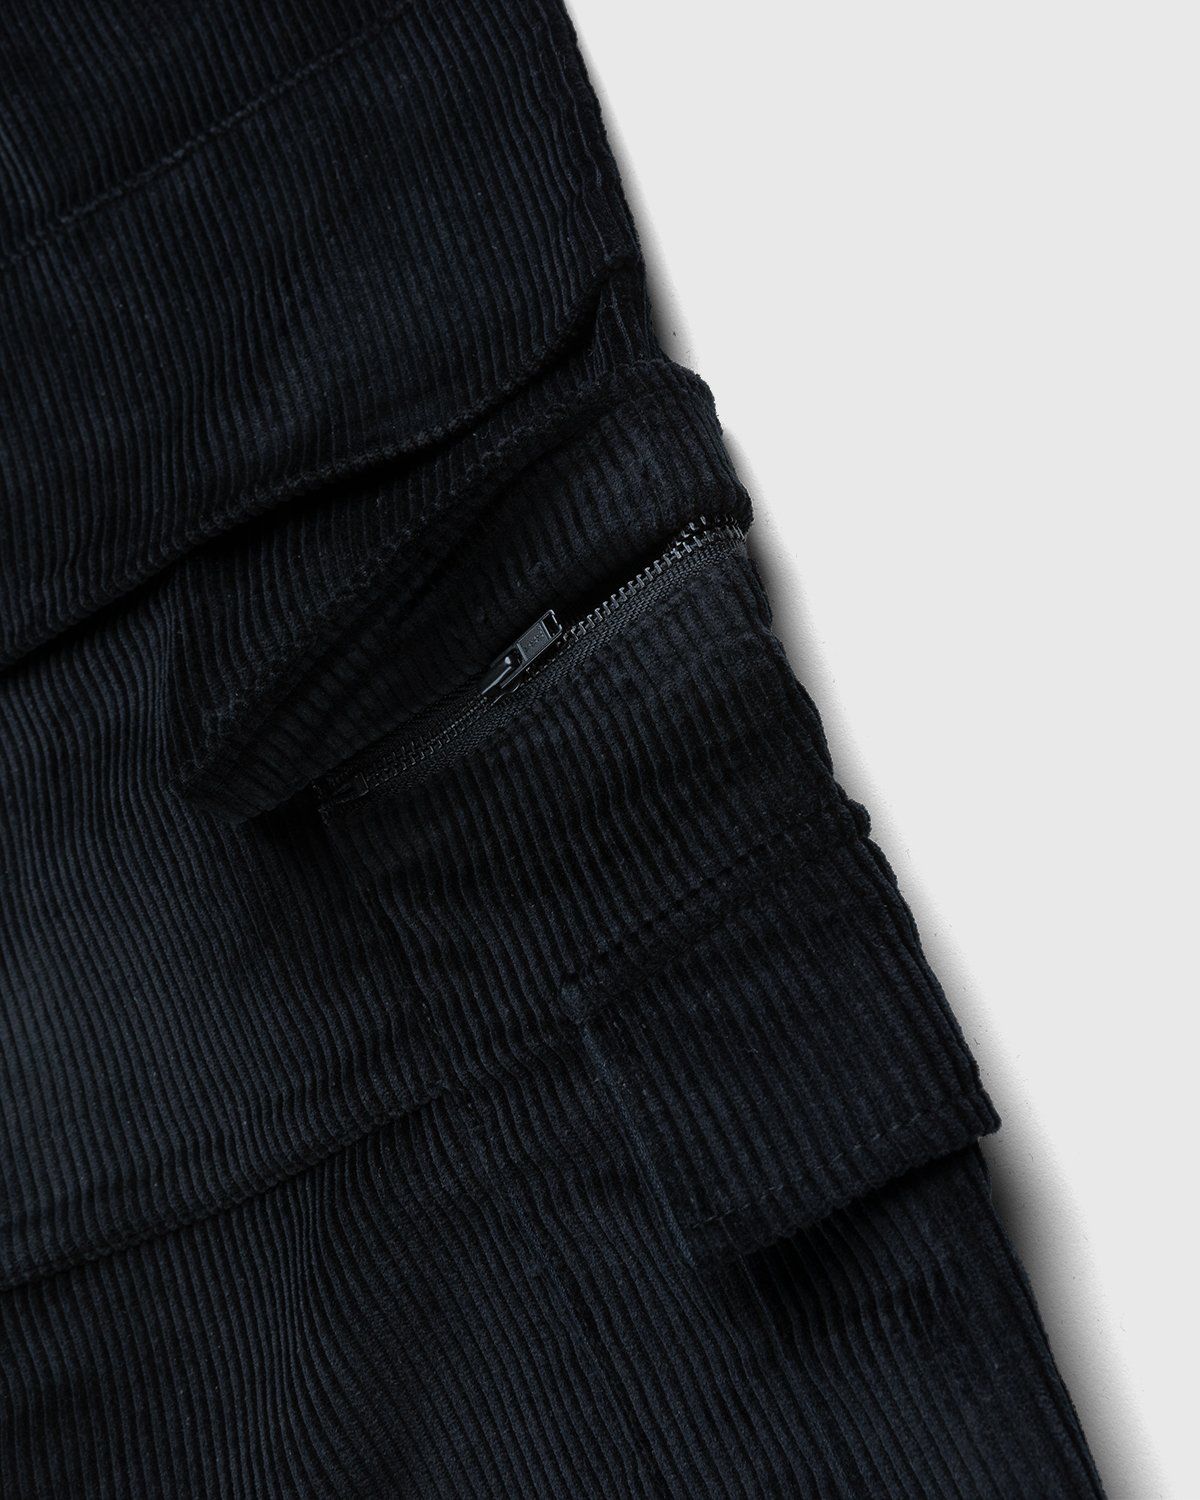 Winnie New York – Corduroy Cargo Black - Pants - Black - Image 6